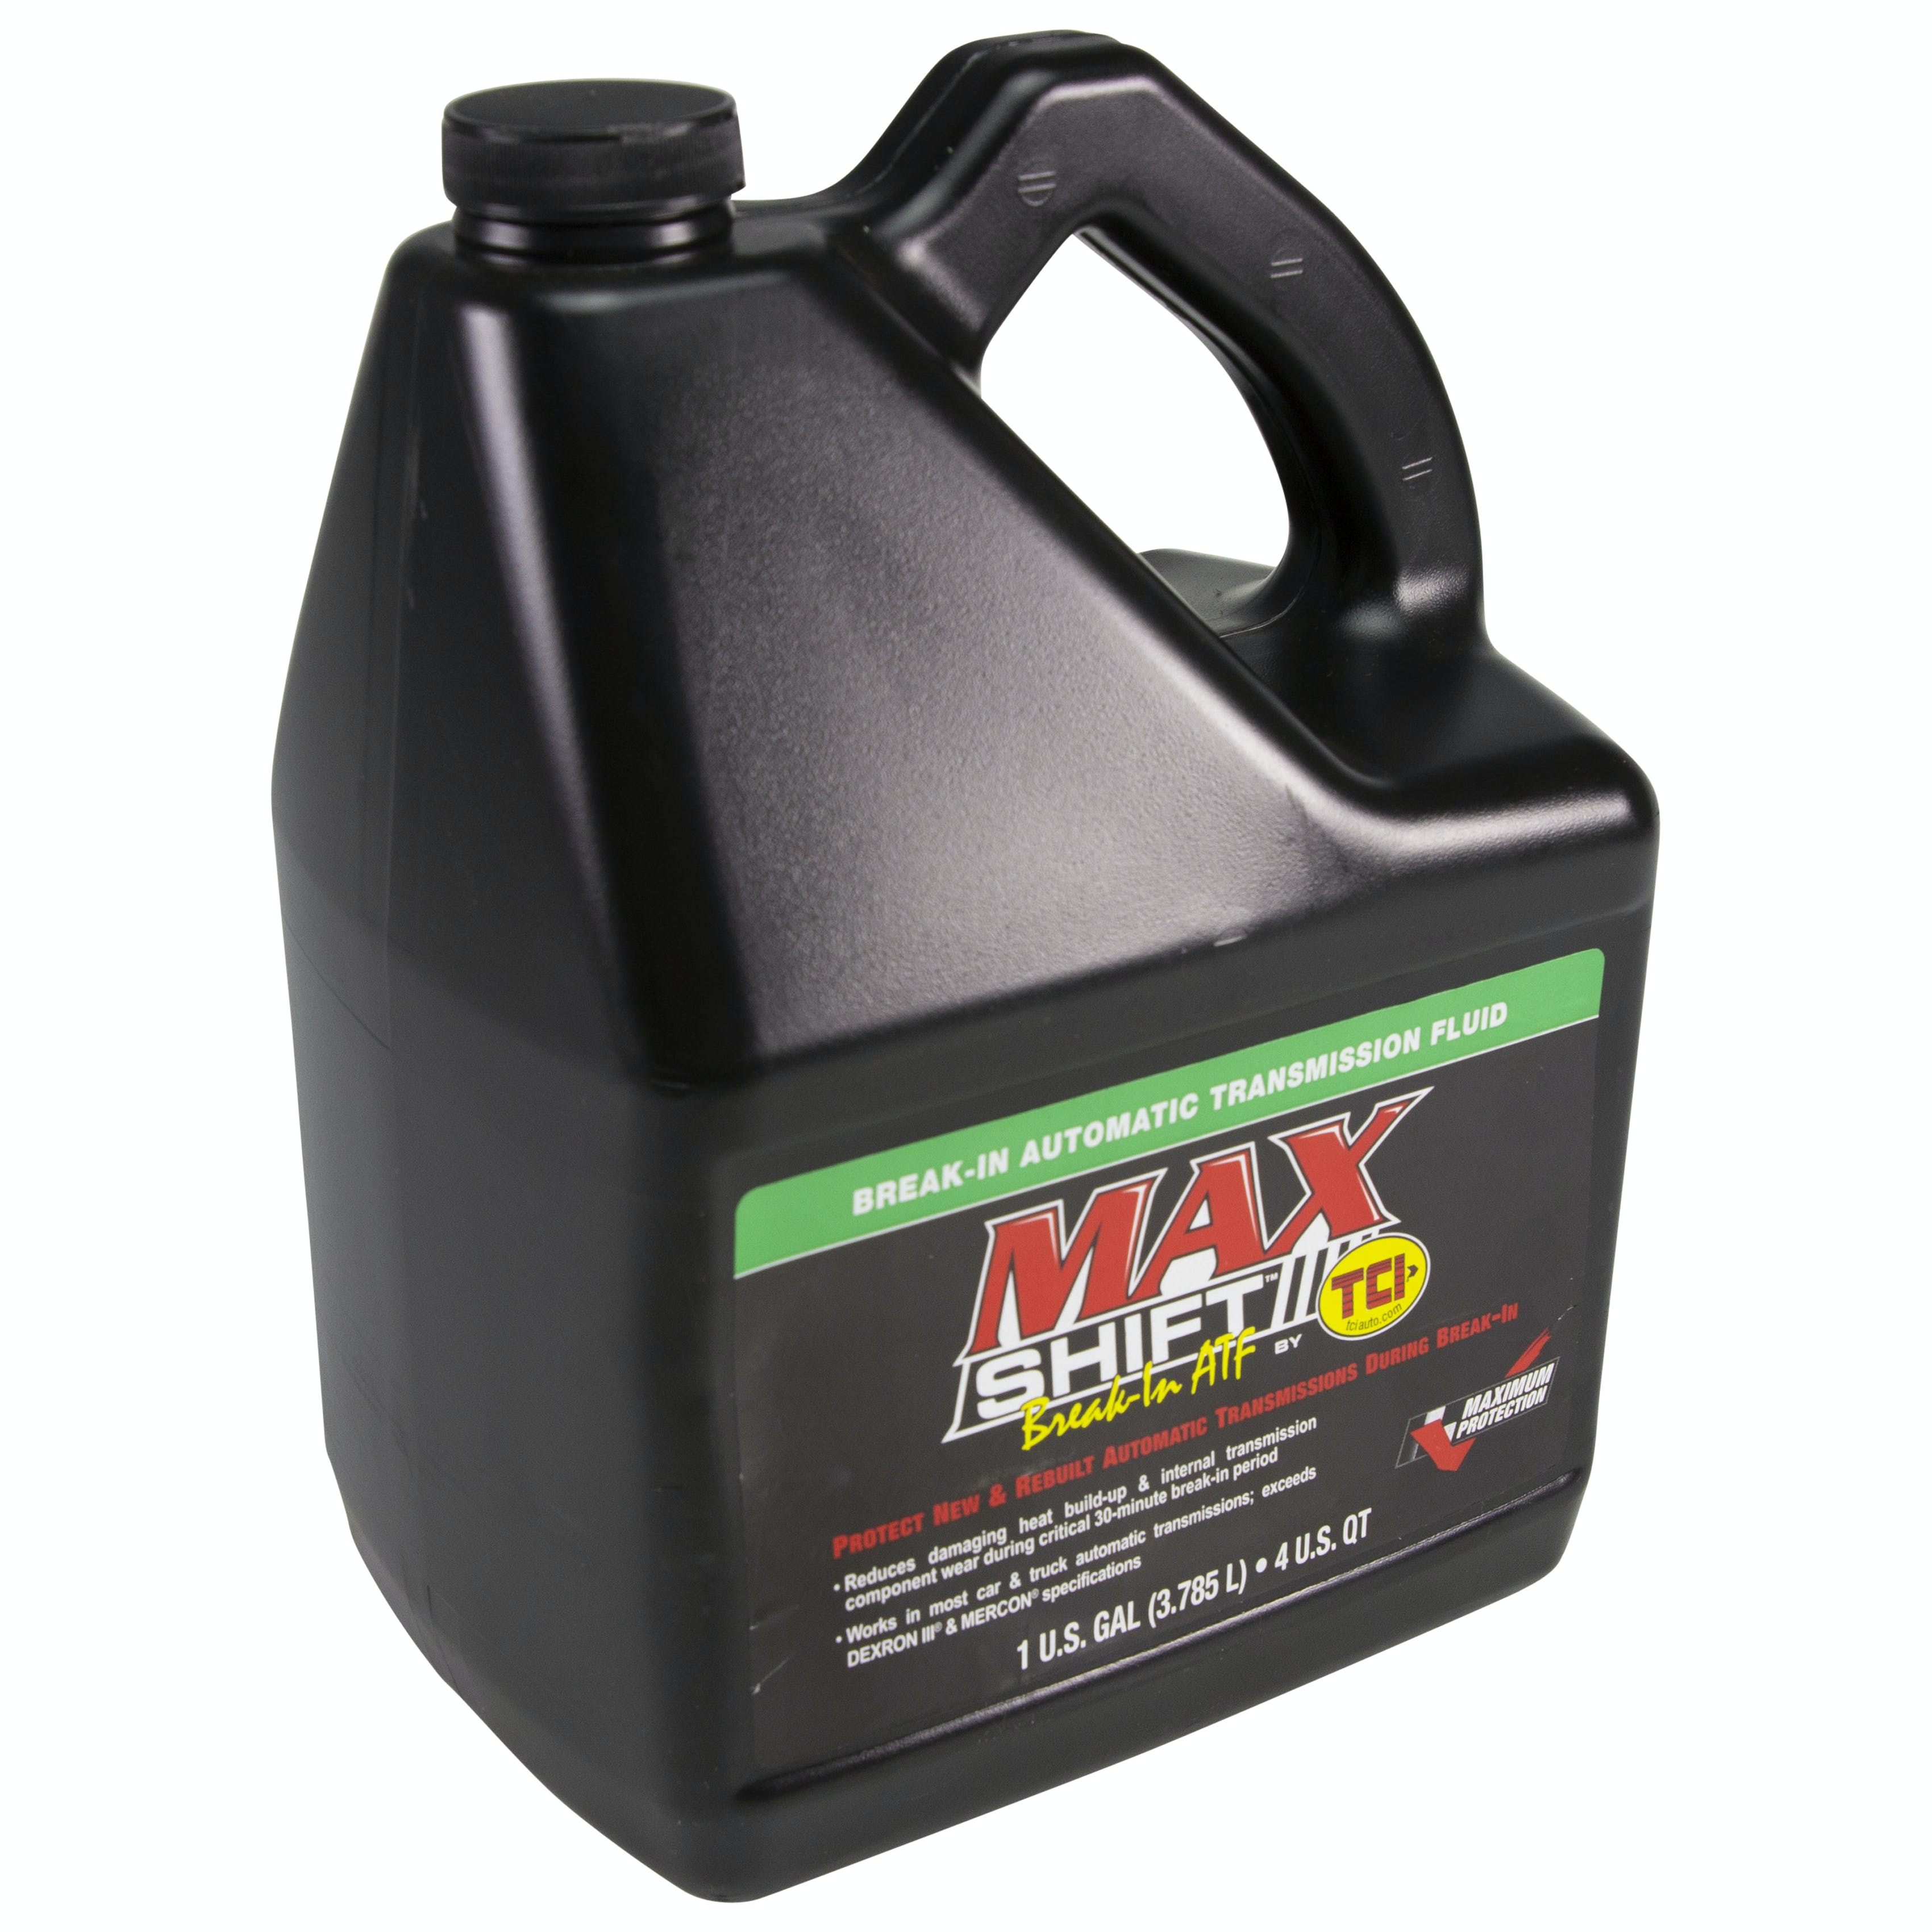 TCI Automotive 15901 Max-Shift Break-In Transmission Fluid 1 Gallon